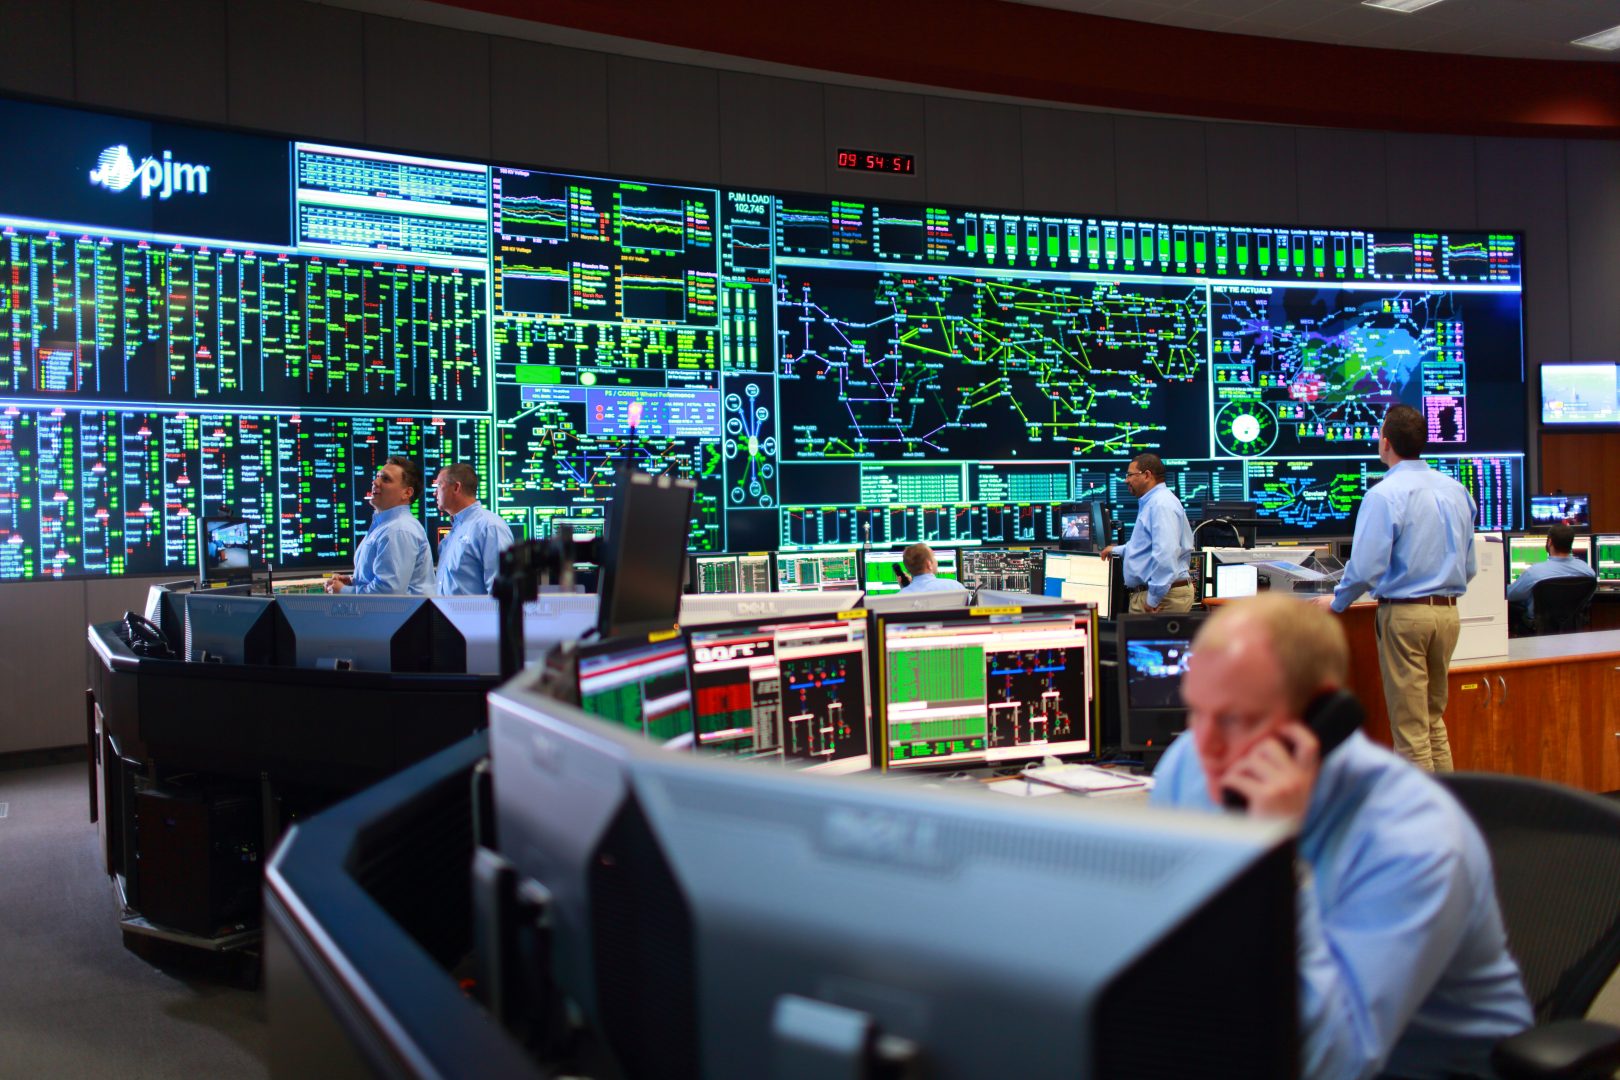 A view of the PJM  control room. 
